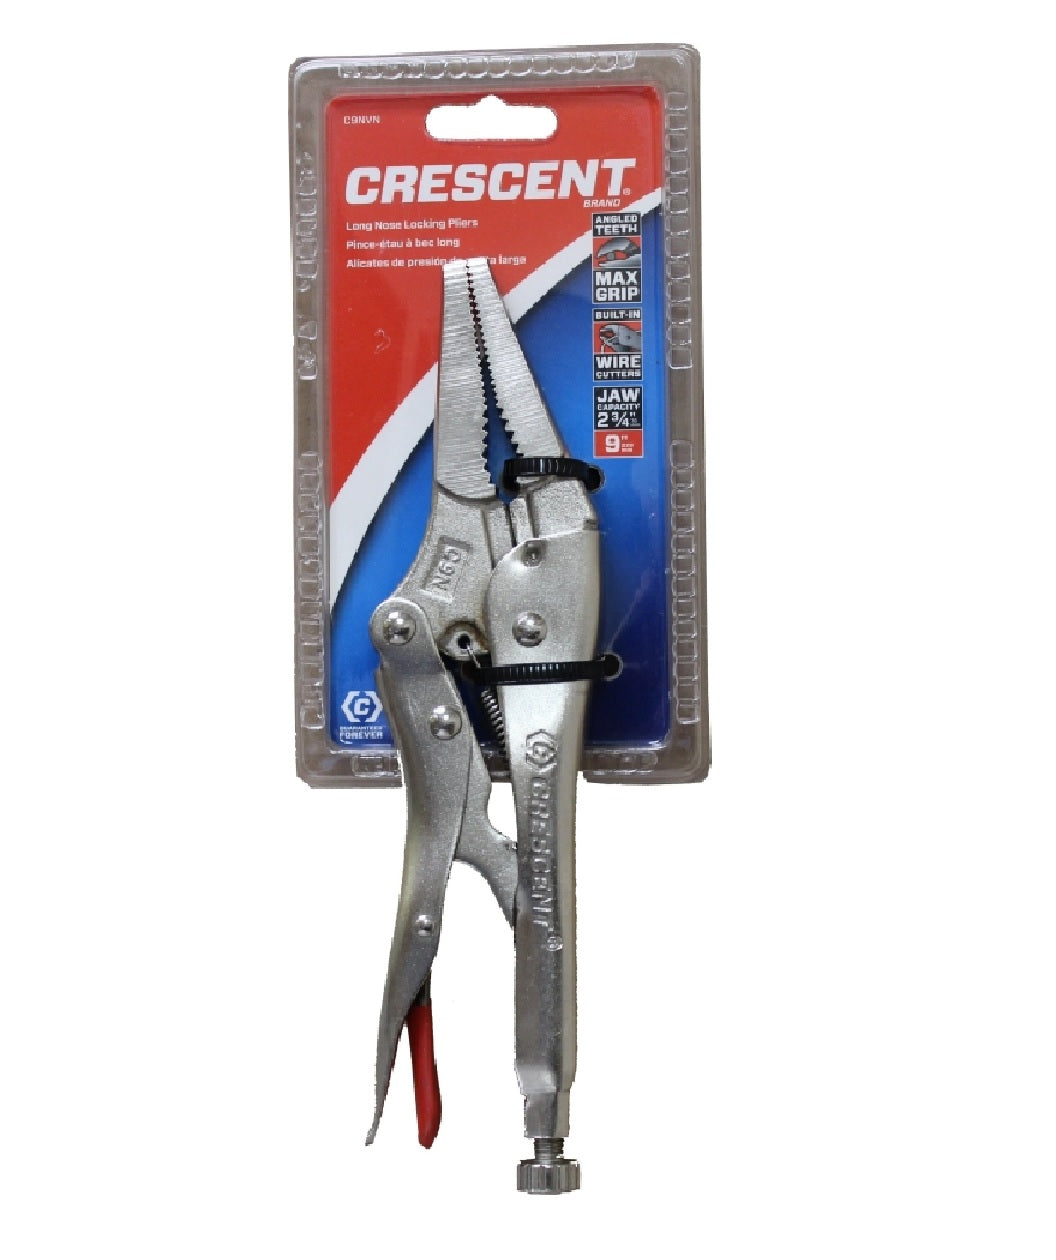 Crescent C9NVN-08 Long Nose Plier, Alloy Steel, 9 inch